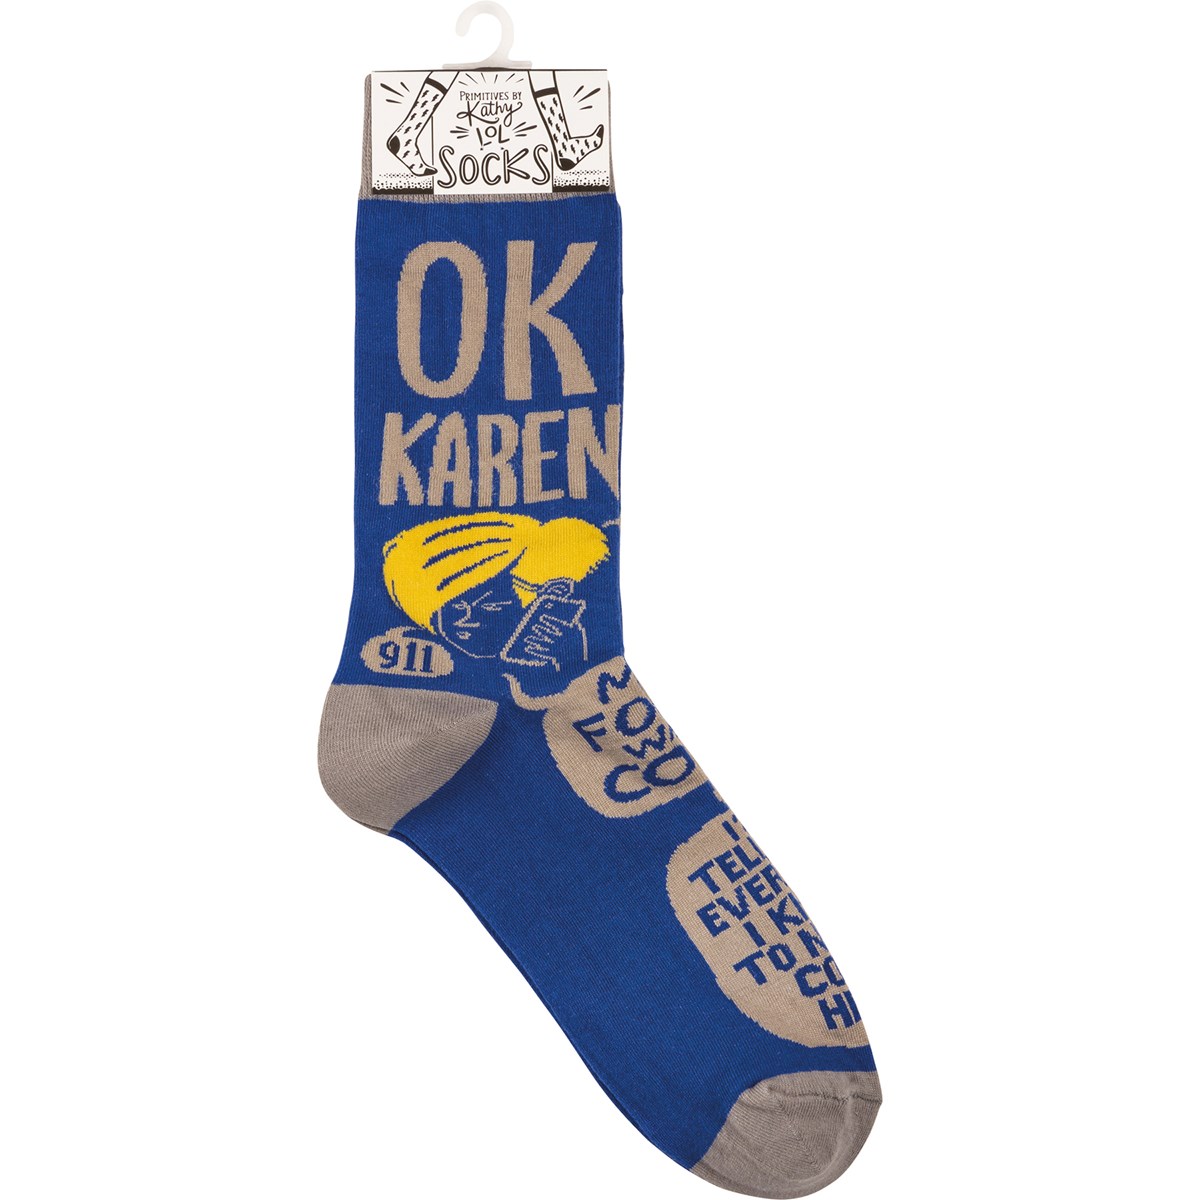 Socks - Ok Karen - One Size Fits Most - Cotton, Nylon, Spandex